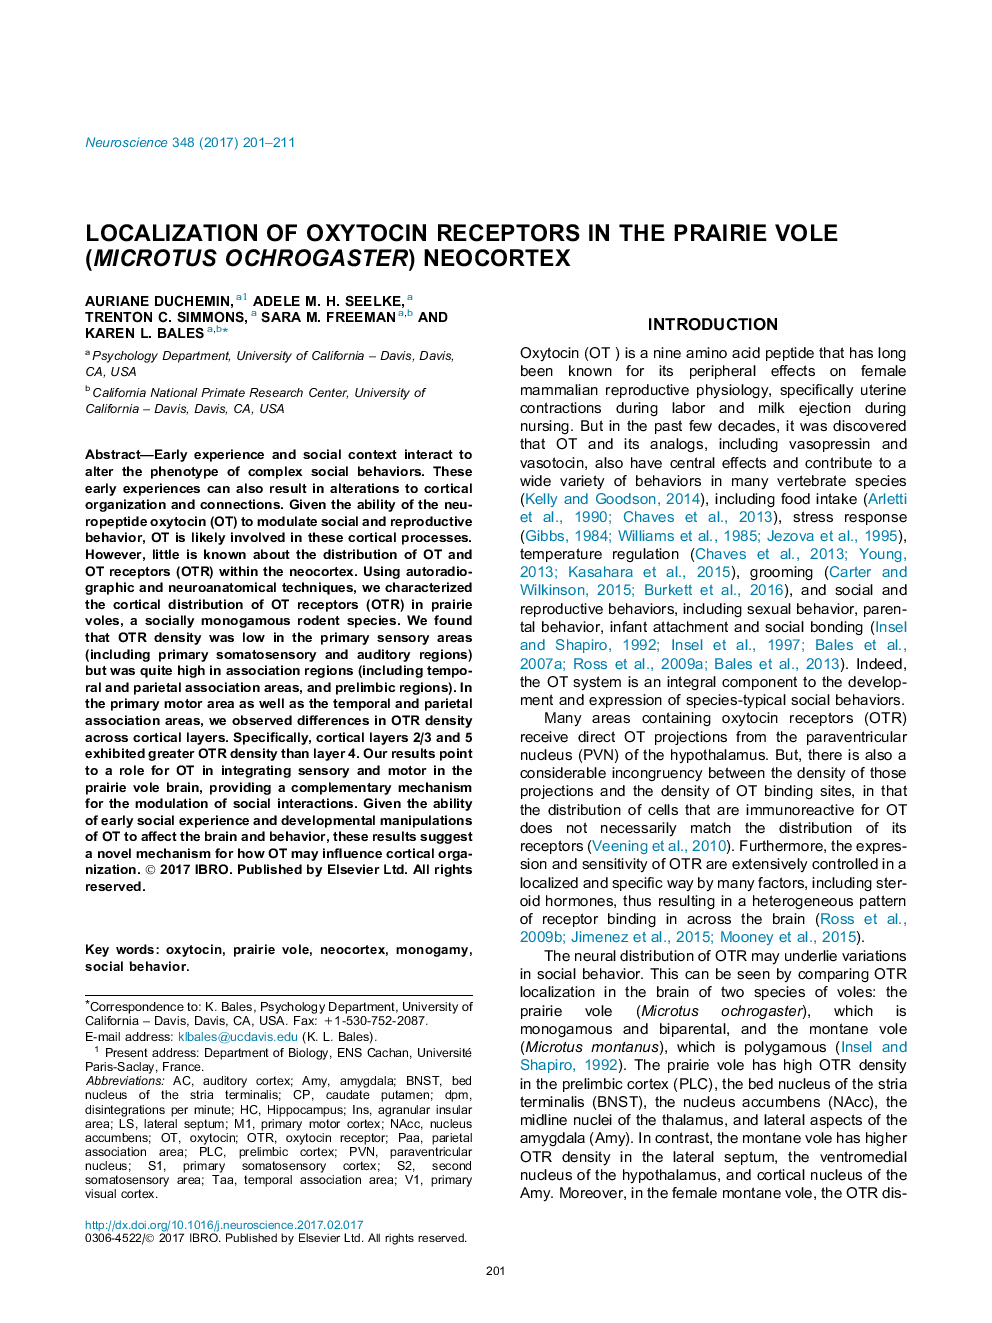 Localization of oxytocin receptors in the prairie vole (Microtus ochrogaster) neocortex